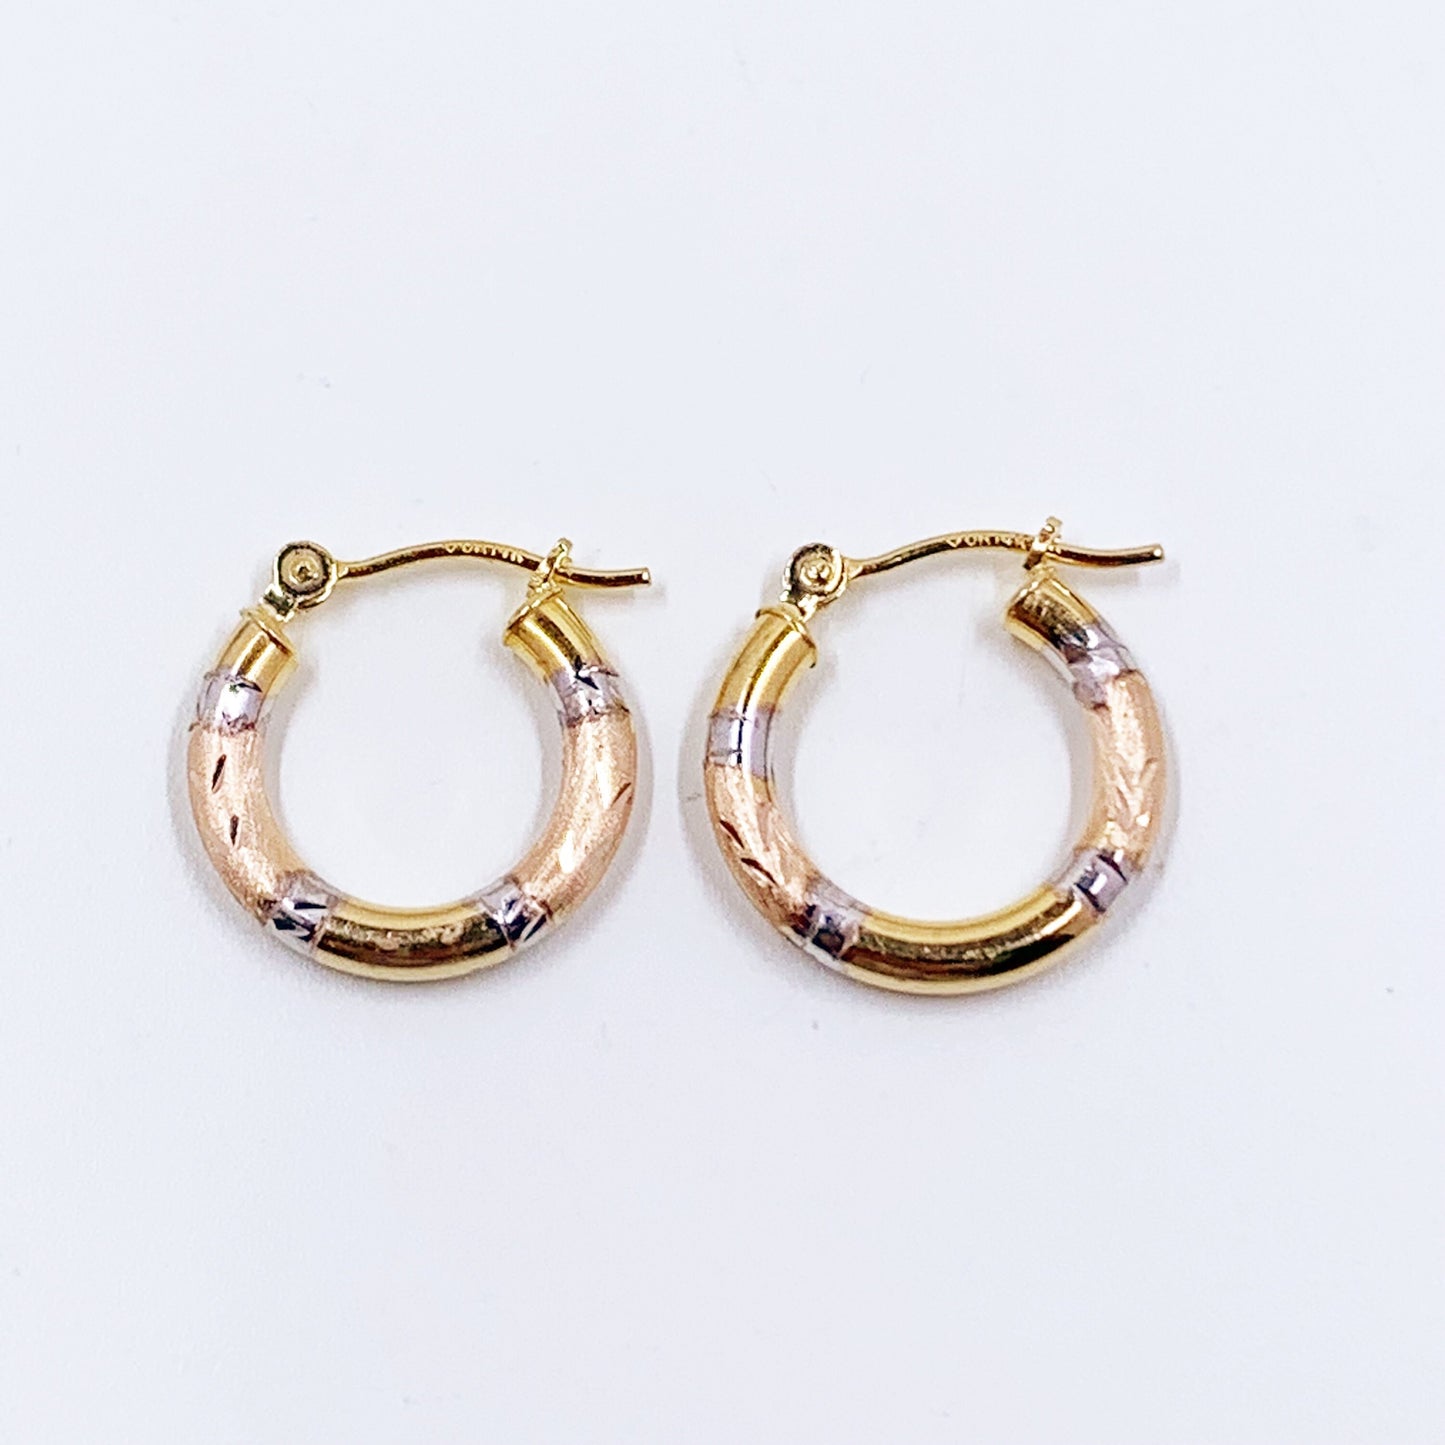 Estate Tri-Color 14k Gold Hoop Earrings | Small 14k Gold Hoops